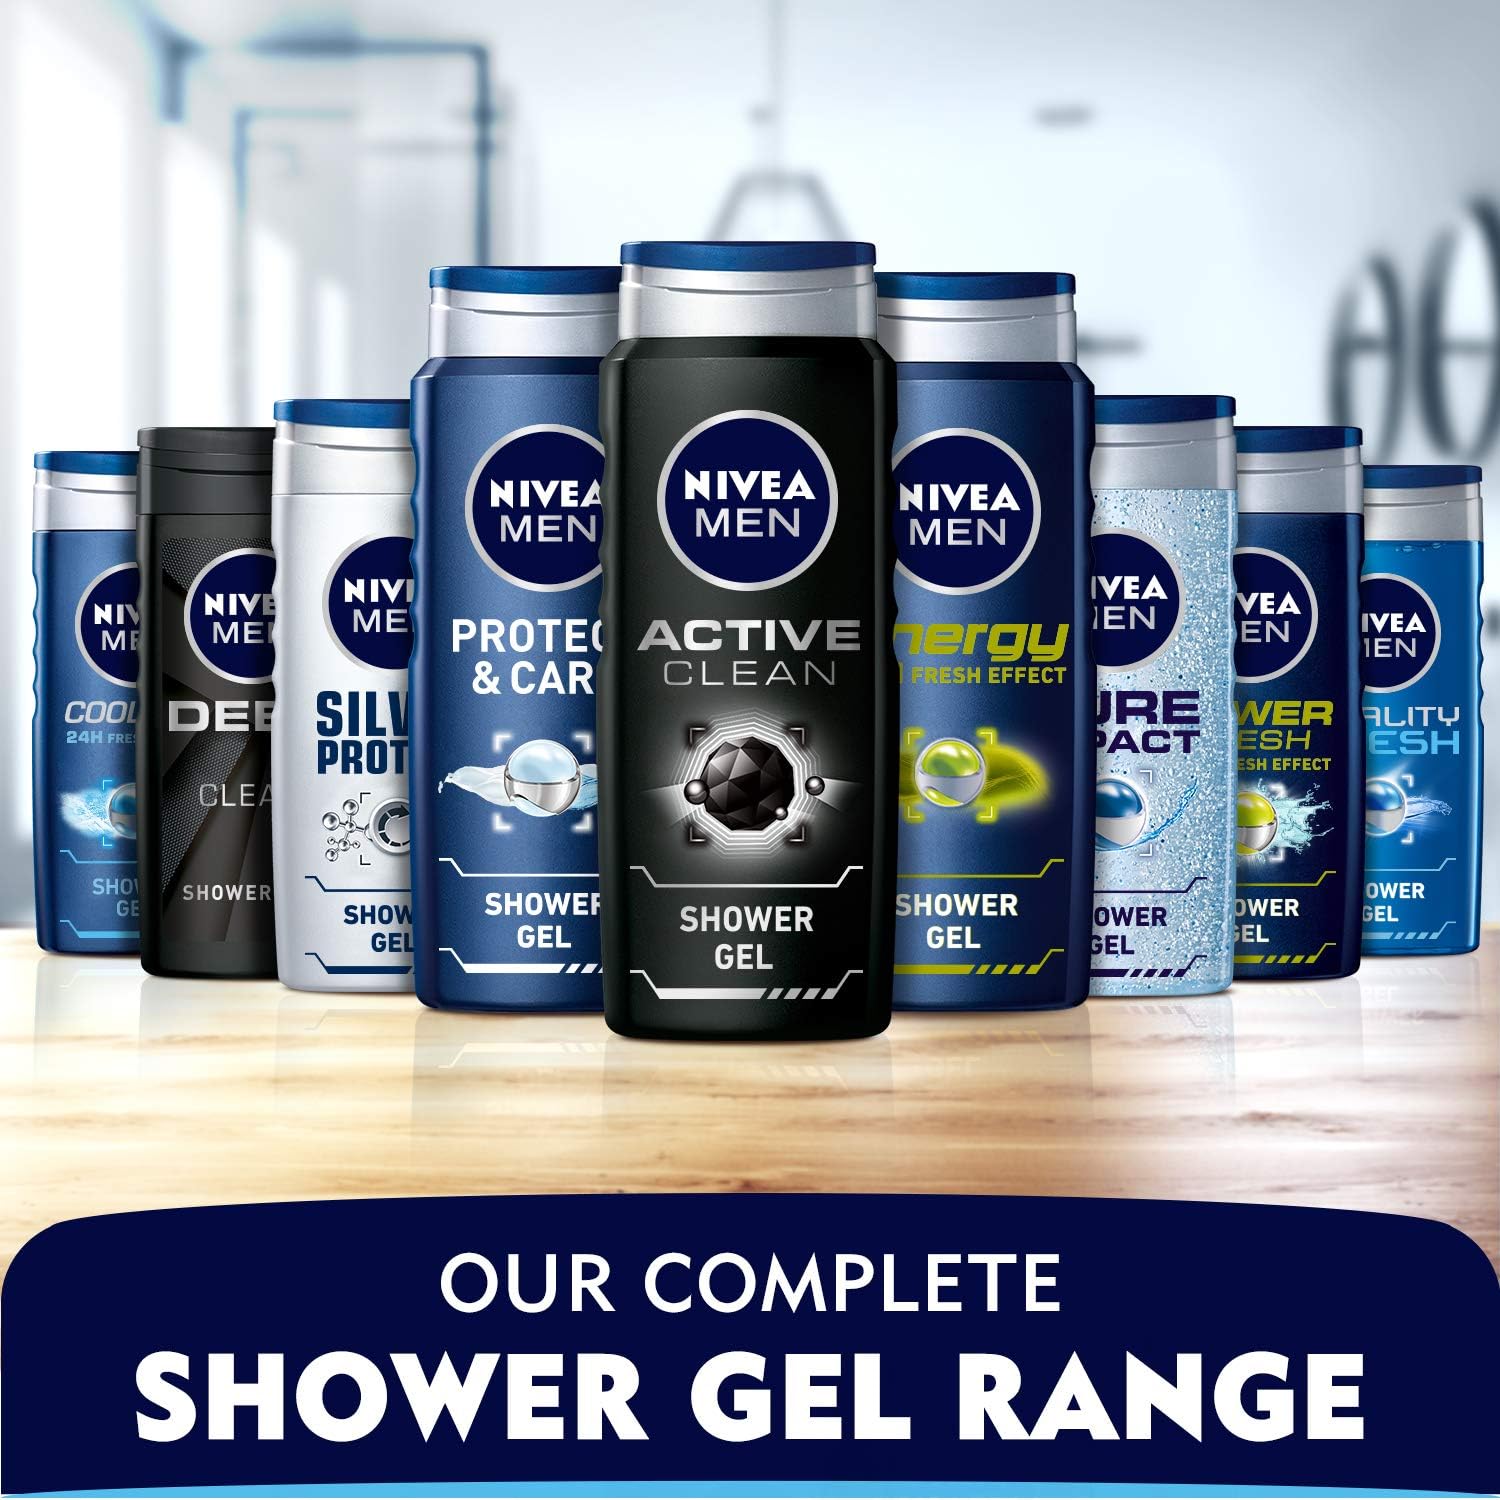 NIVEA MEN 3in1 Shower Gel Body Wash, Energy 24h Fresh Masculine Scent, 500ml